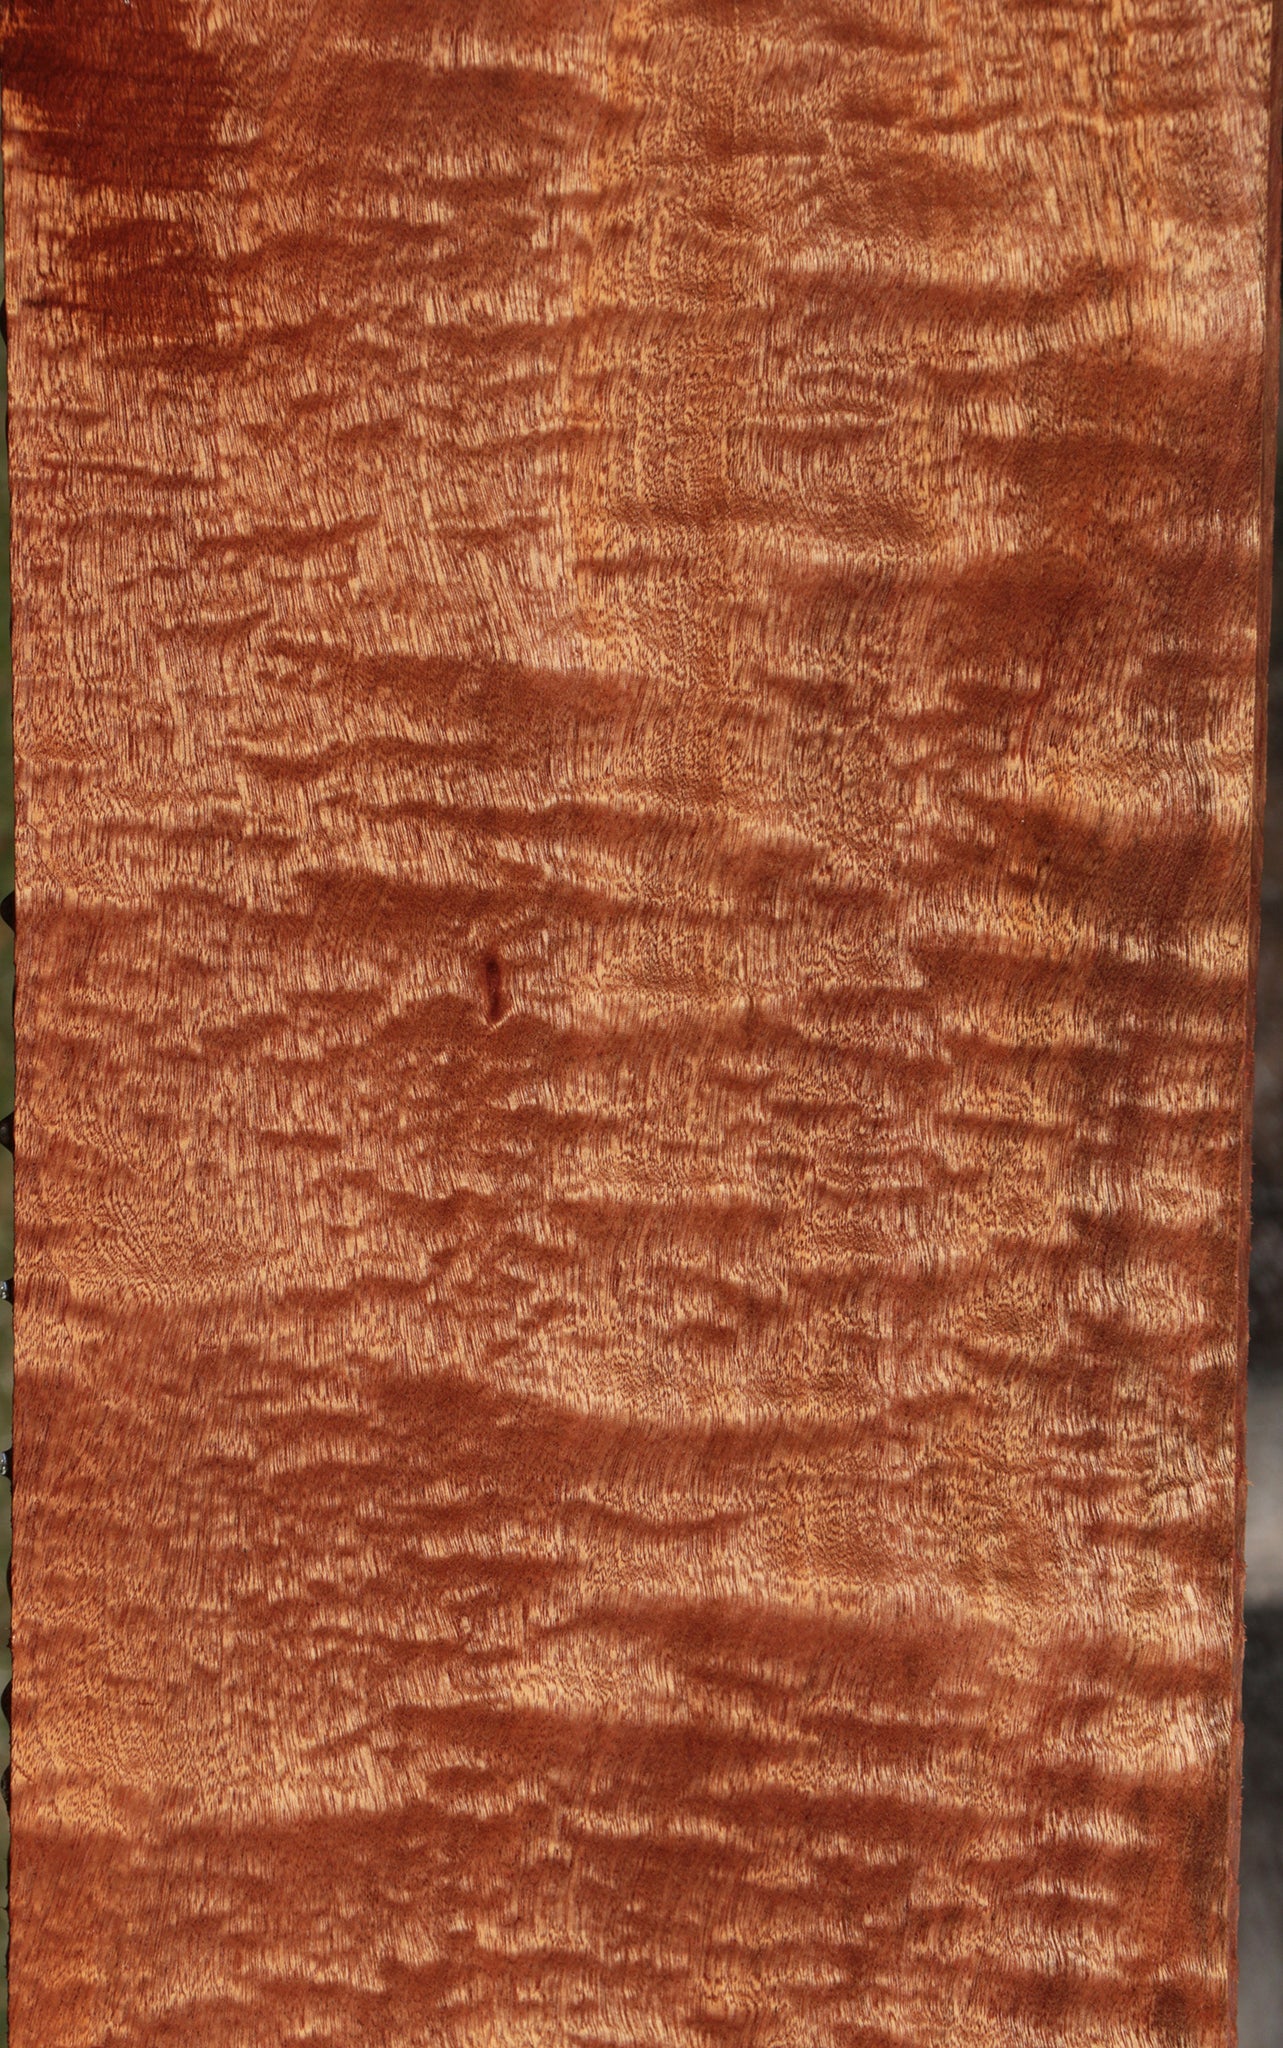 Exhibition Sapele Lumber